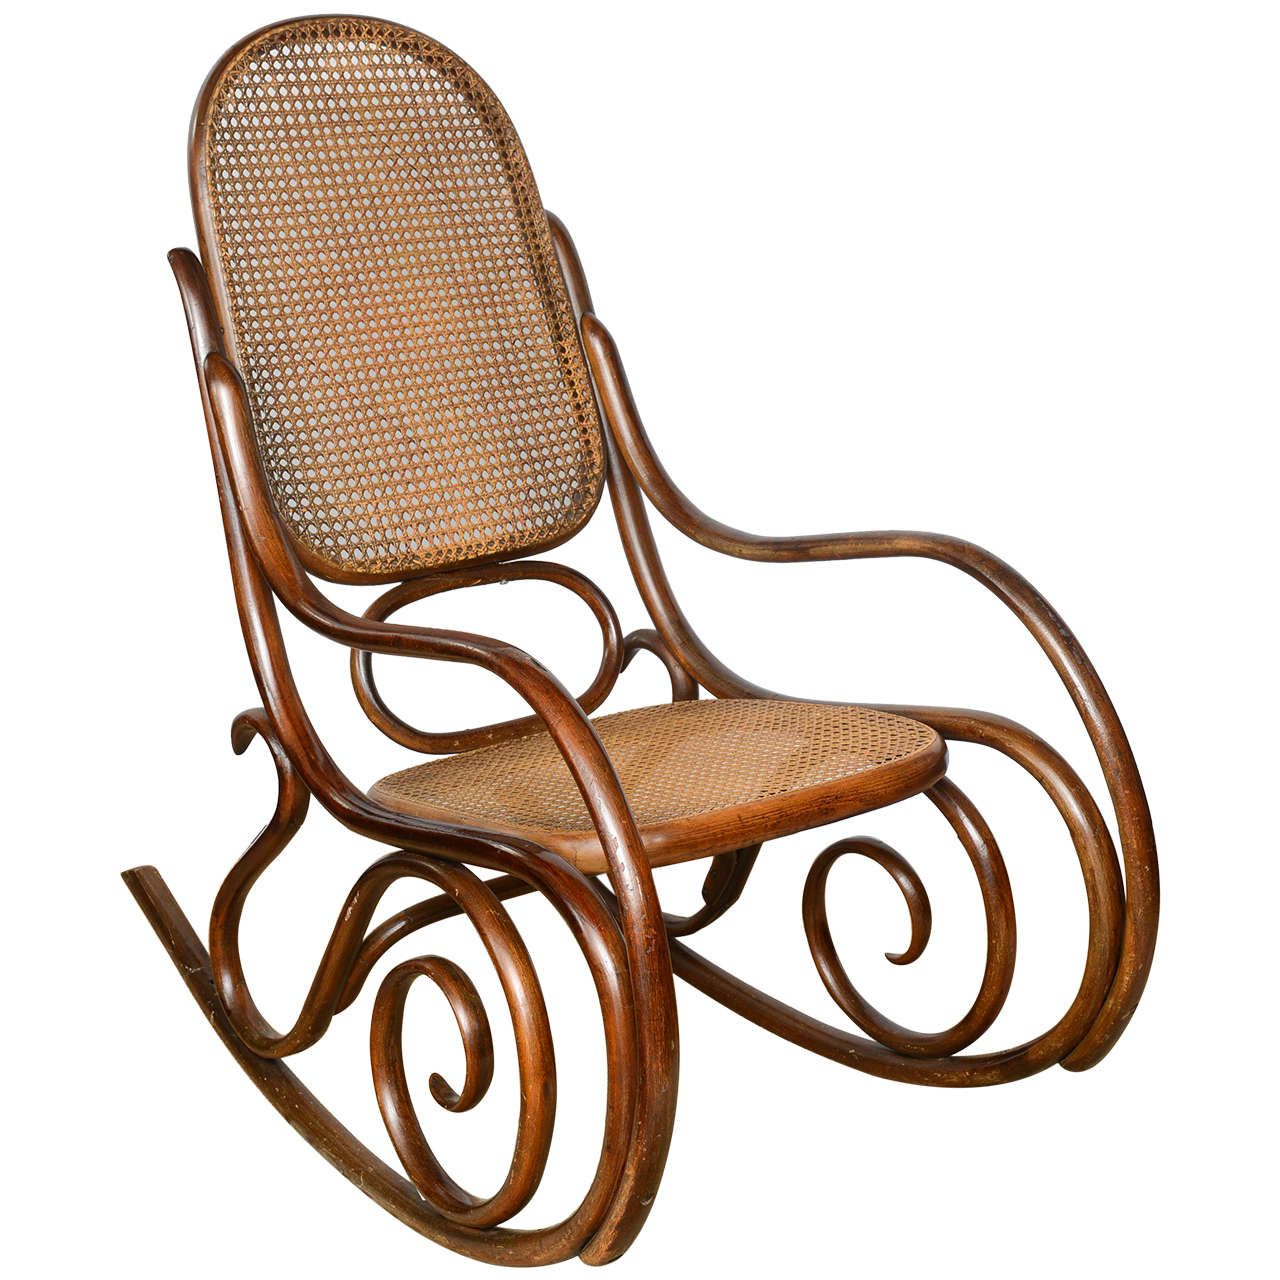 Vintage Bentwood Rocking Chair at 1stdibs